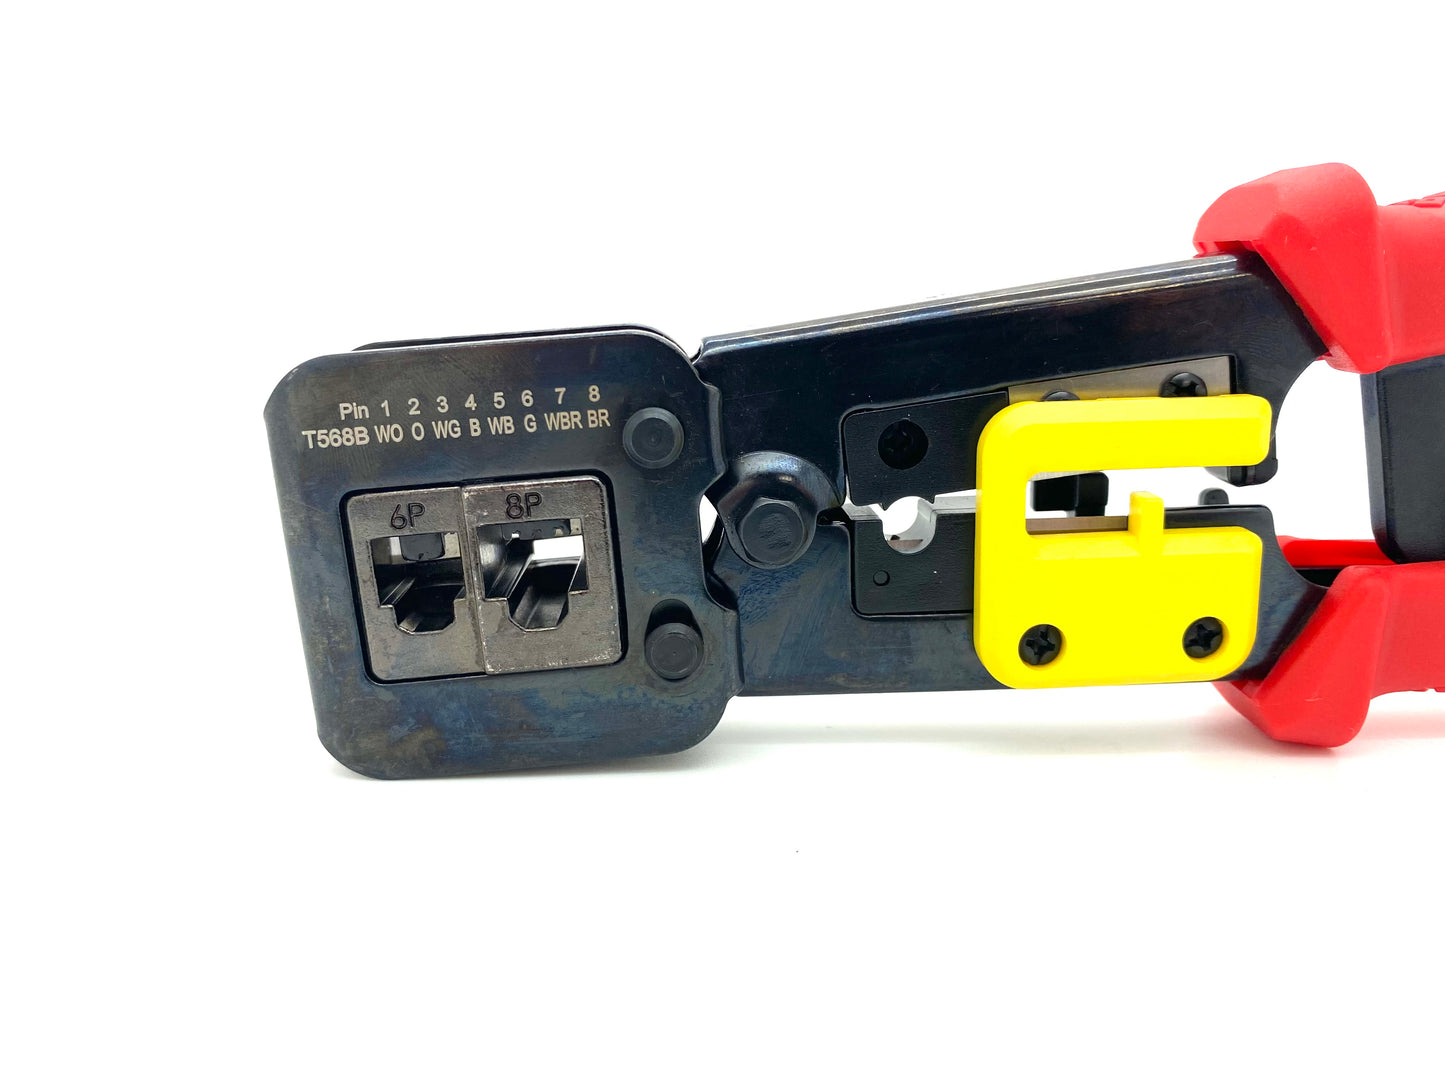 Ratchet Crimp Tool for SPEEDY RJ45 Plugs Cat 5e, Cat 6 and 6p6c/6p4c - Red, Black and Yellow